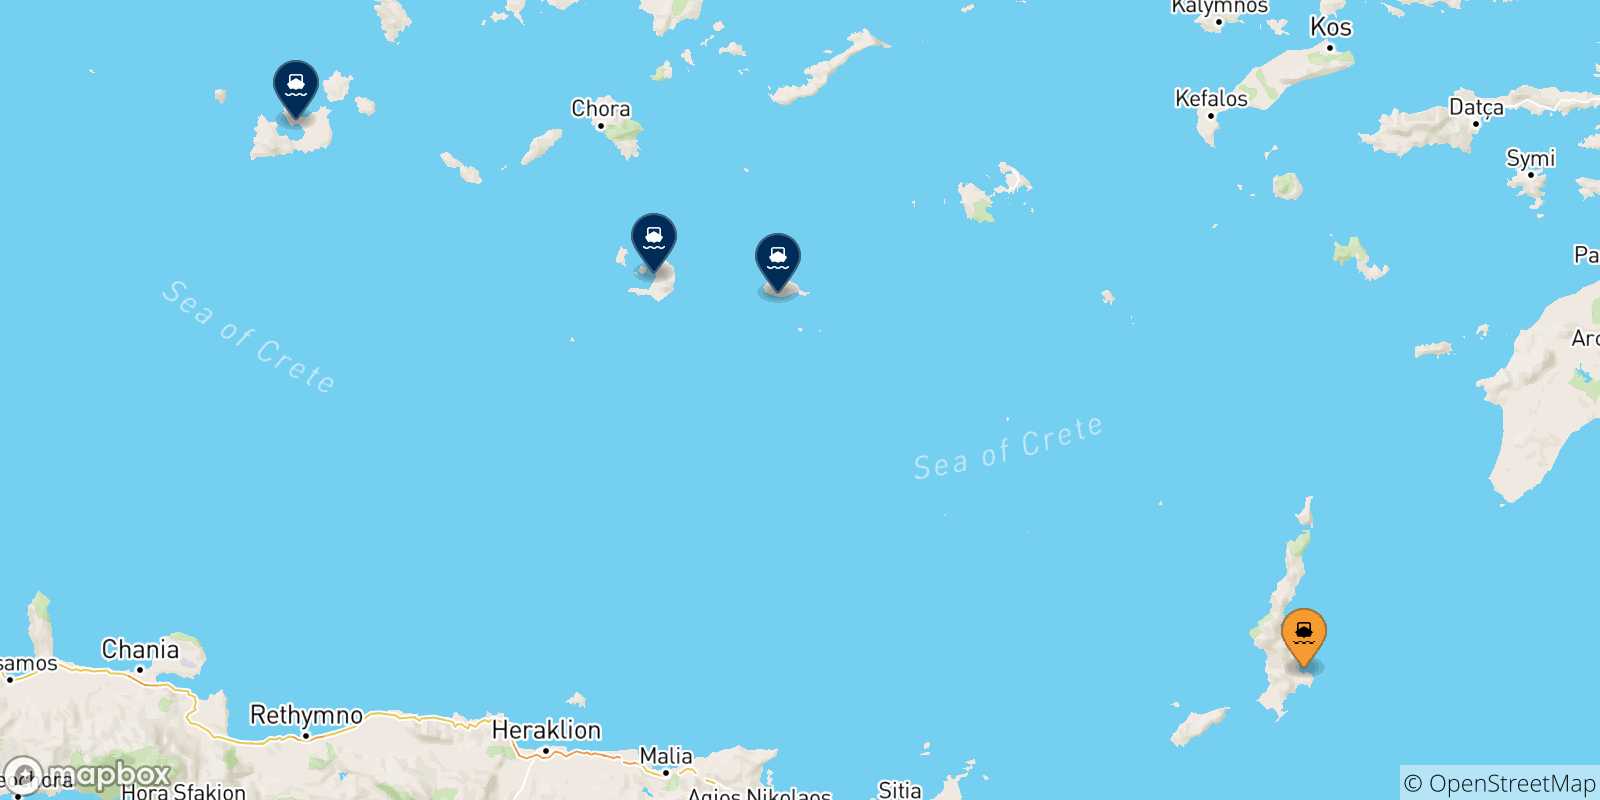 Mappa delle possibili rotte tra Karpathos e le Isole Cicladi